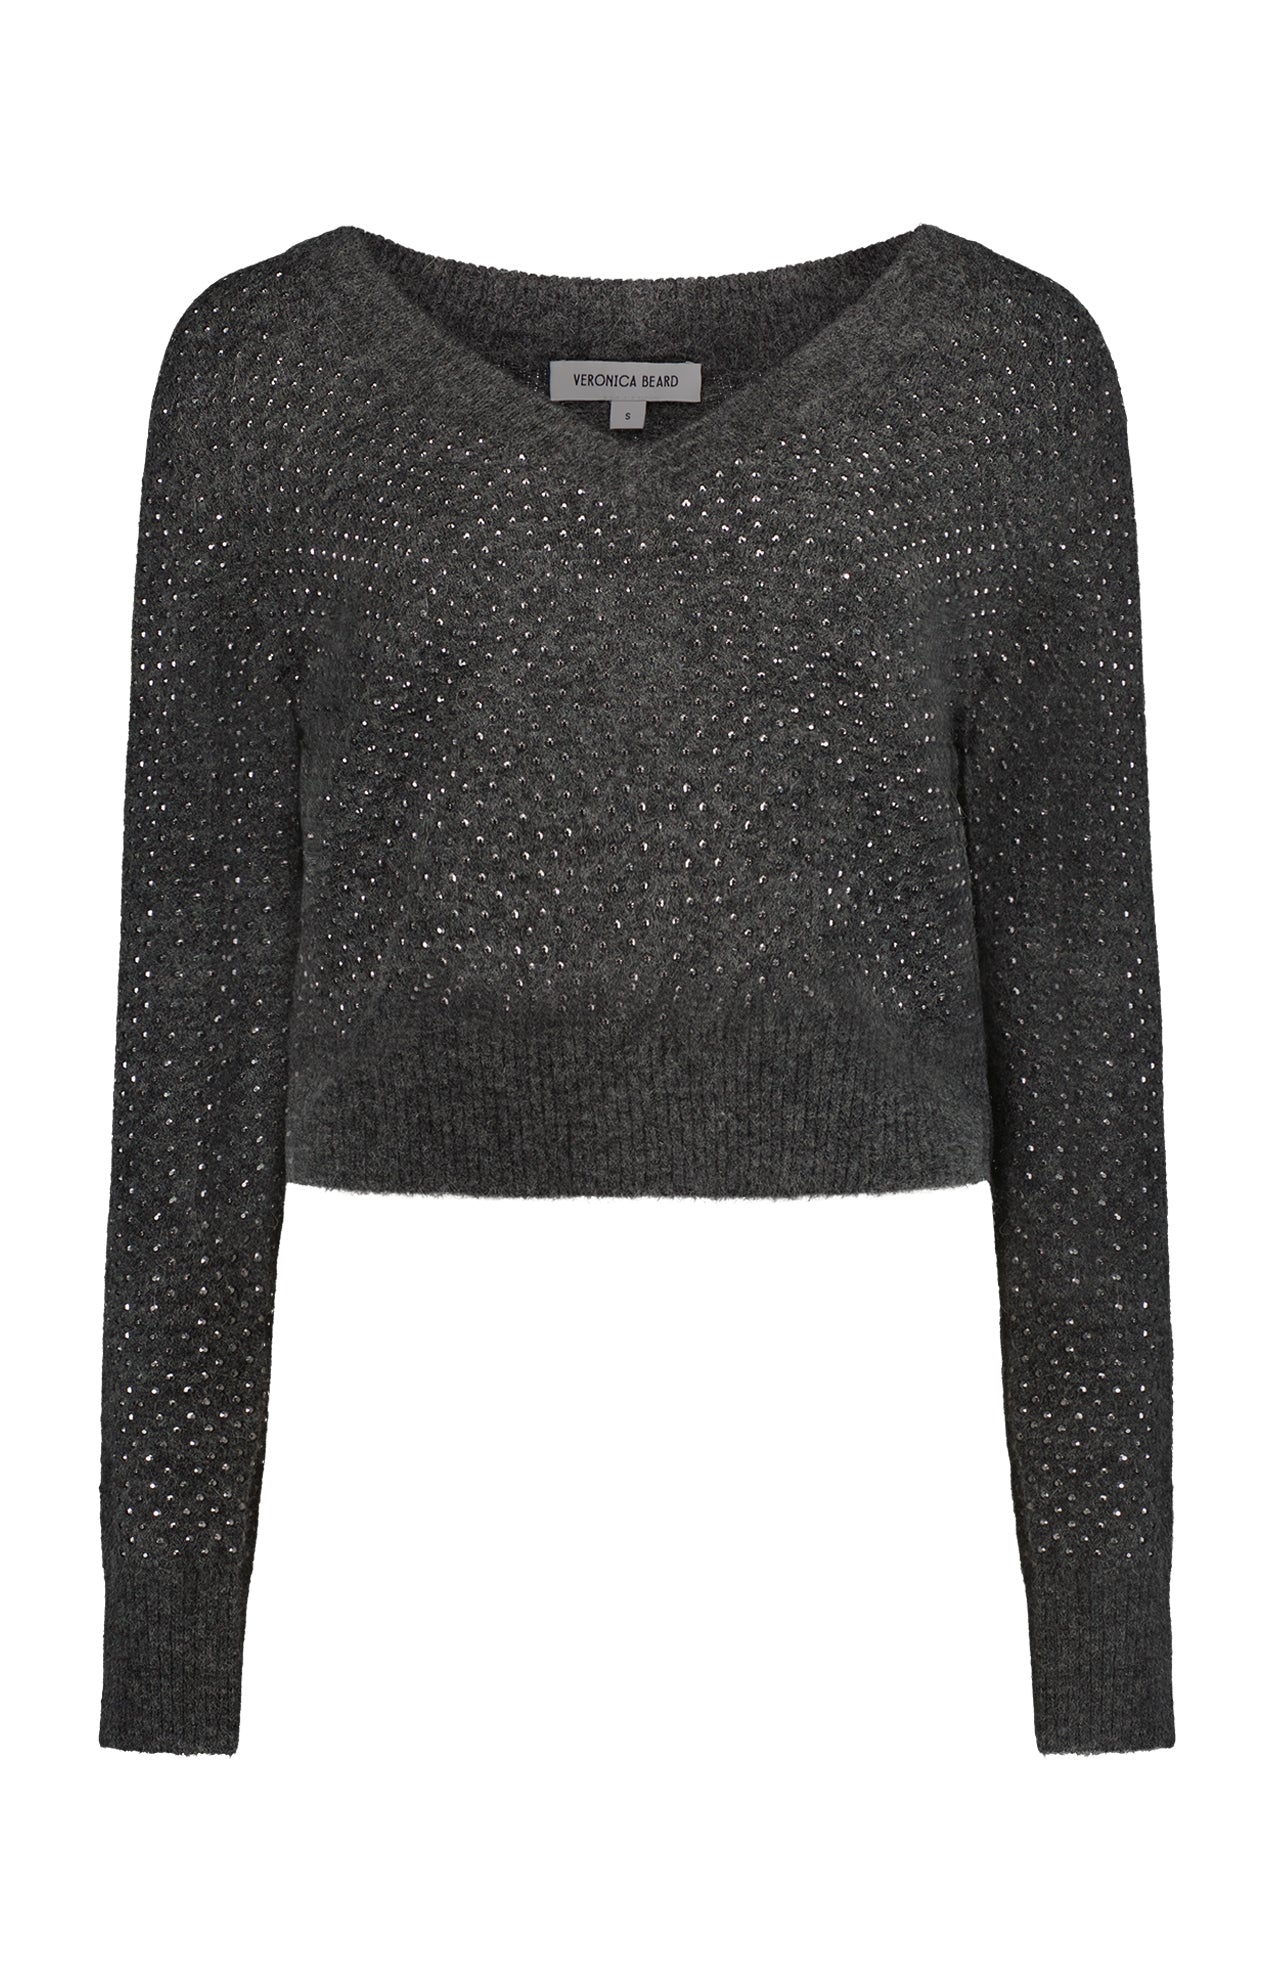 Veronica Beard Women's Pablah Sweater | A.K. Rikk's